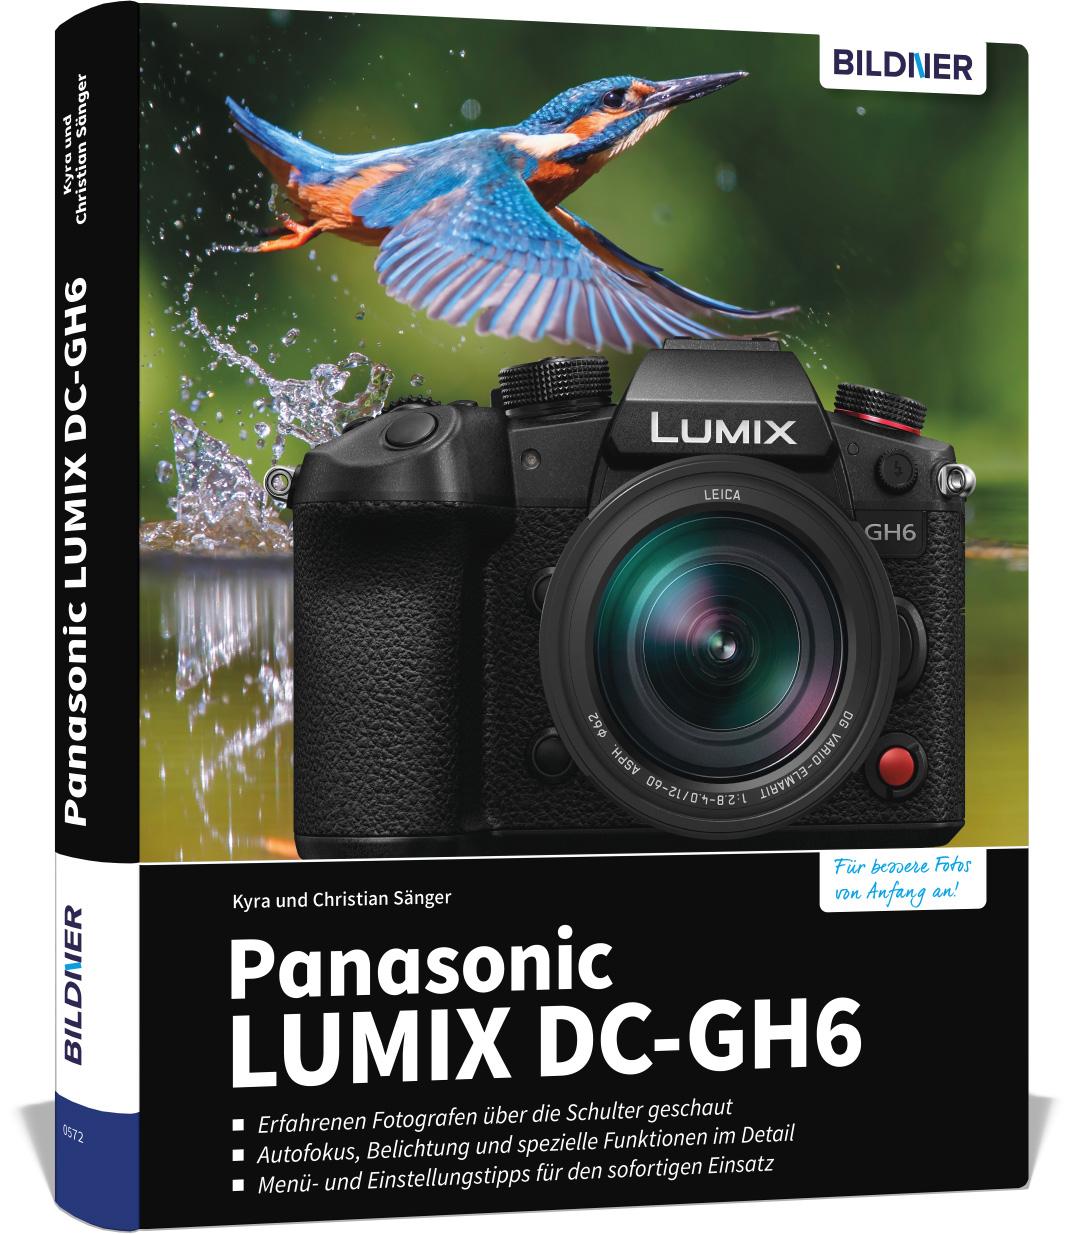 Panasonic LUMIX DC-GH6 Das umfangreiche Praxisbuch zu Ihrer Kamera!